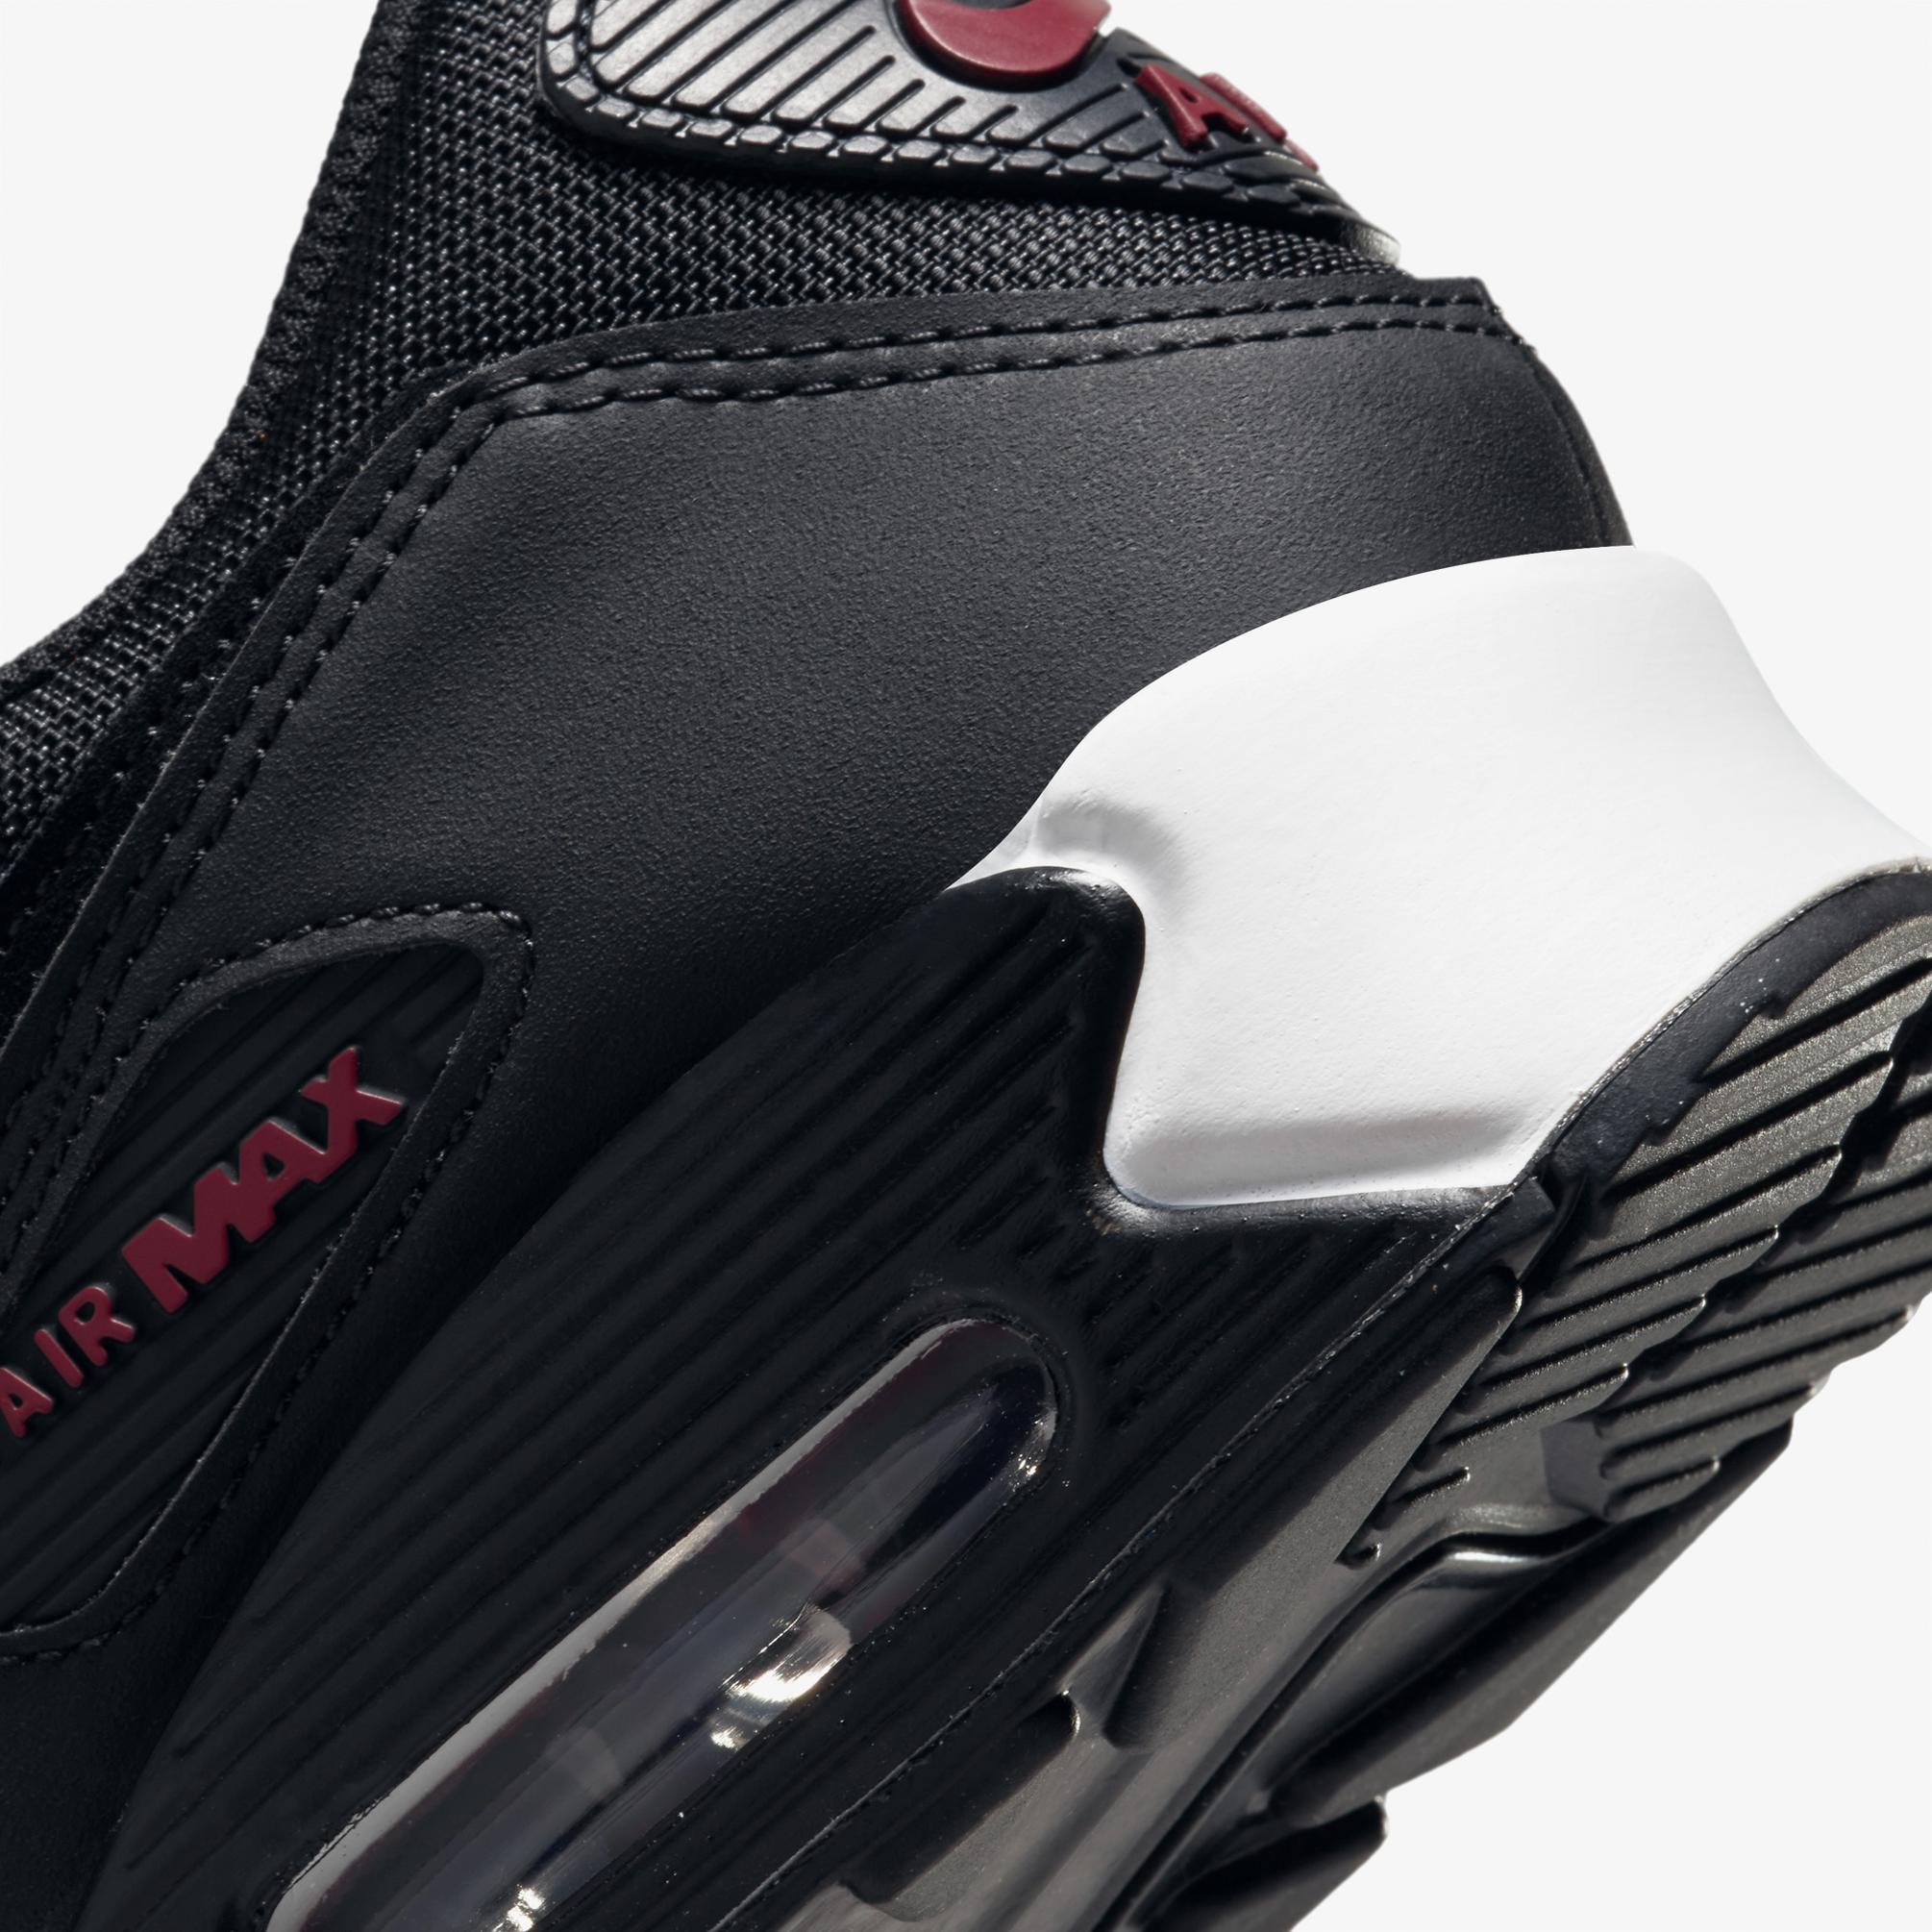  Nike Air Max 90 Erkek Siyah Spor Ayakkabı